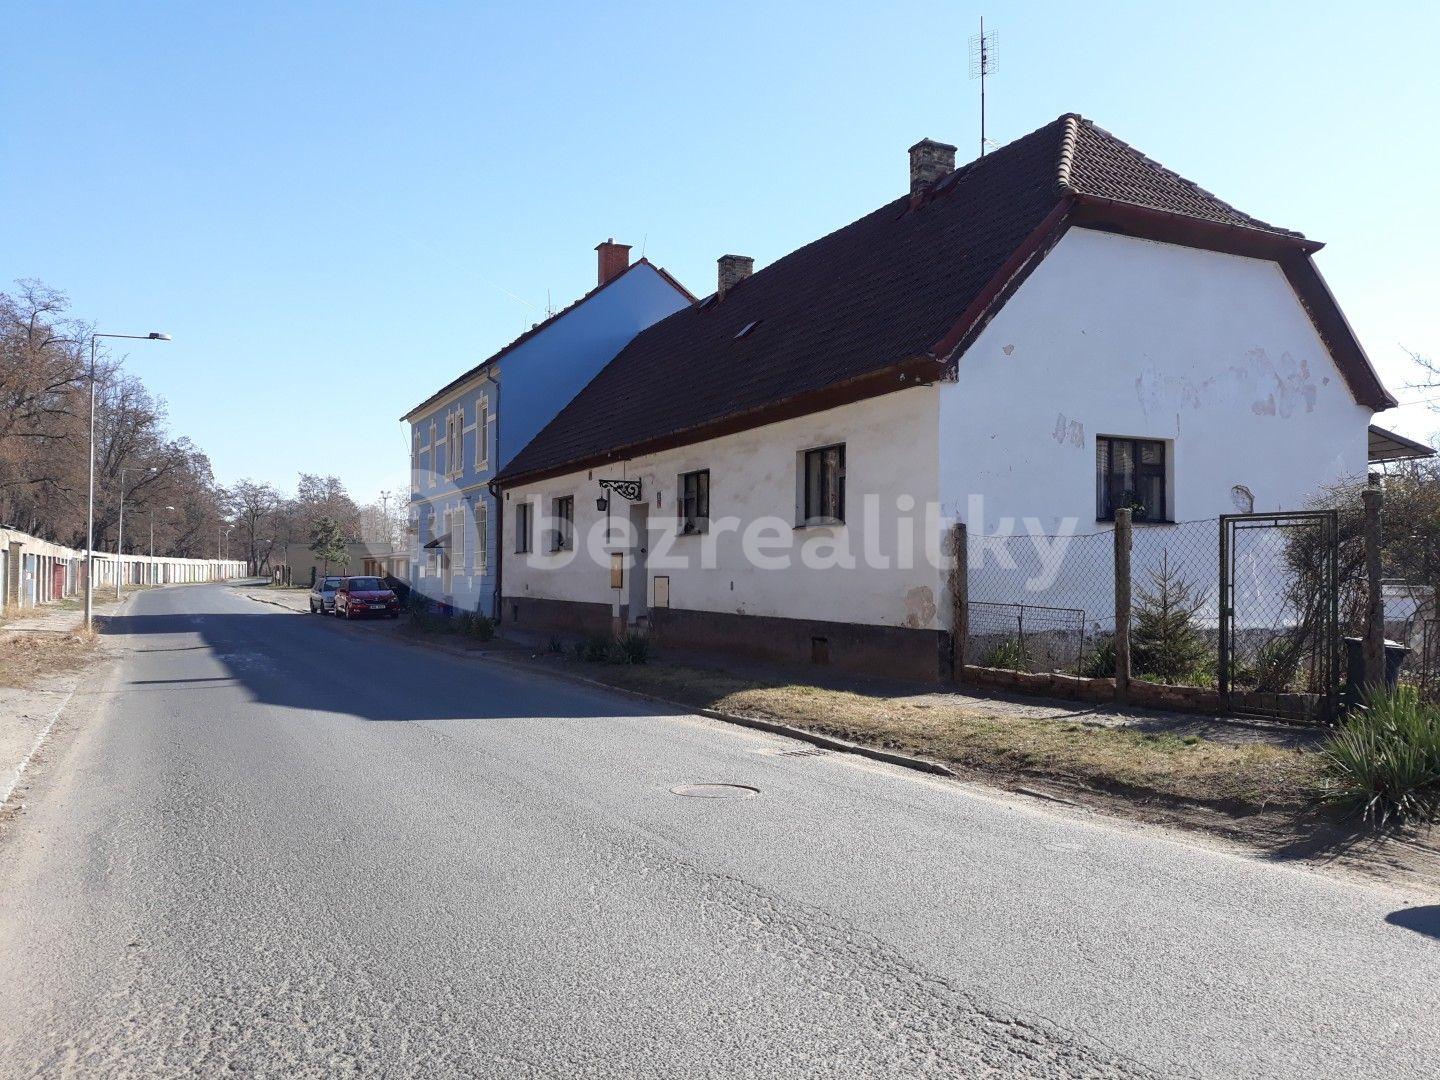 Prodej domu 240 m², pozemek 485 m², Marie Pomocné, Litoměřice, Ústecký kraj